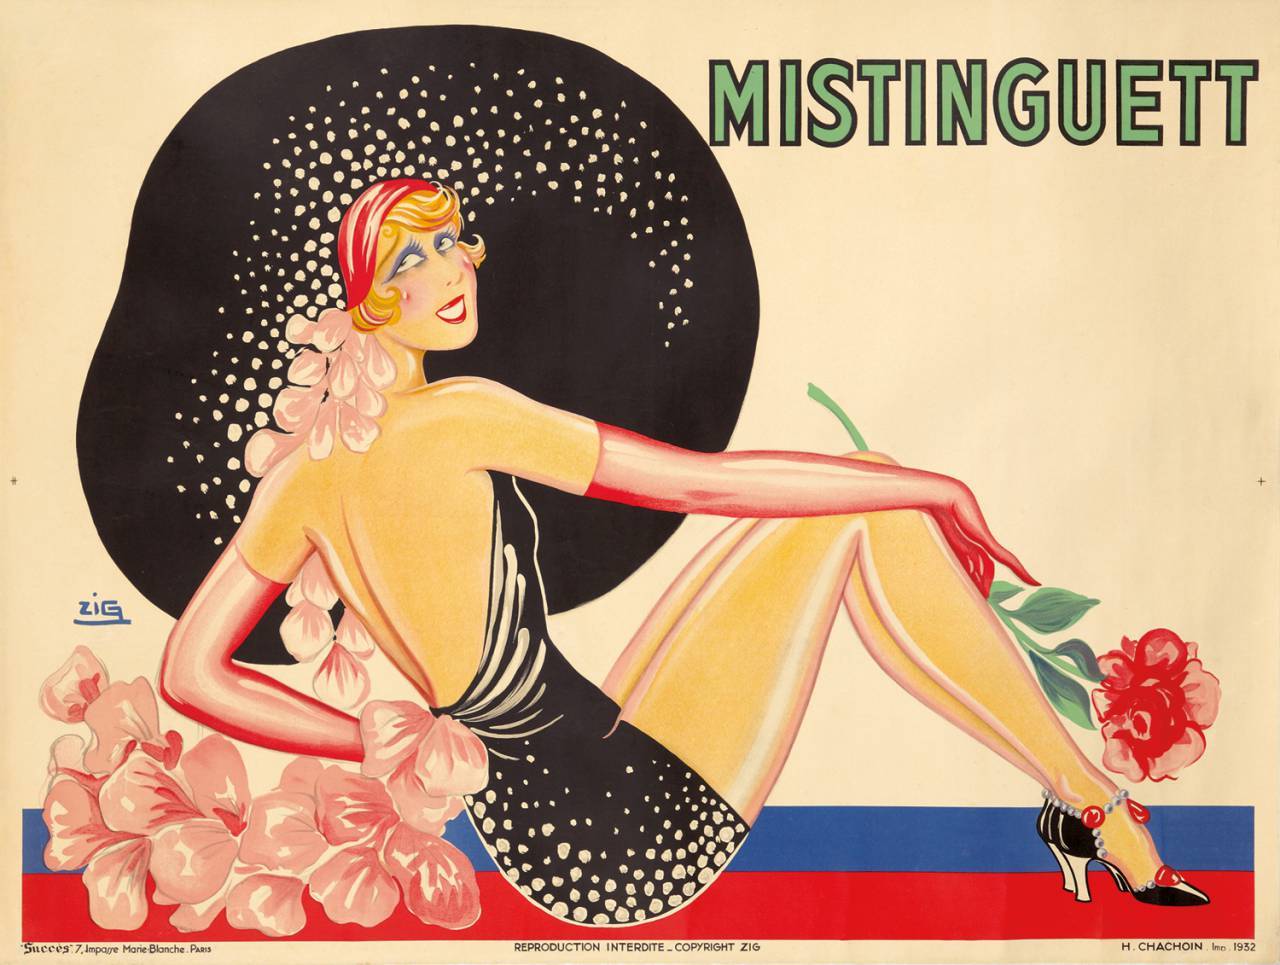 Mistinguett by Zig, 1932